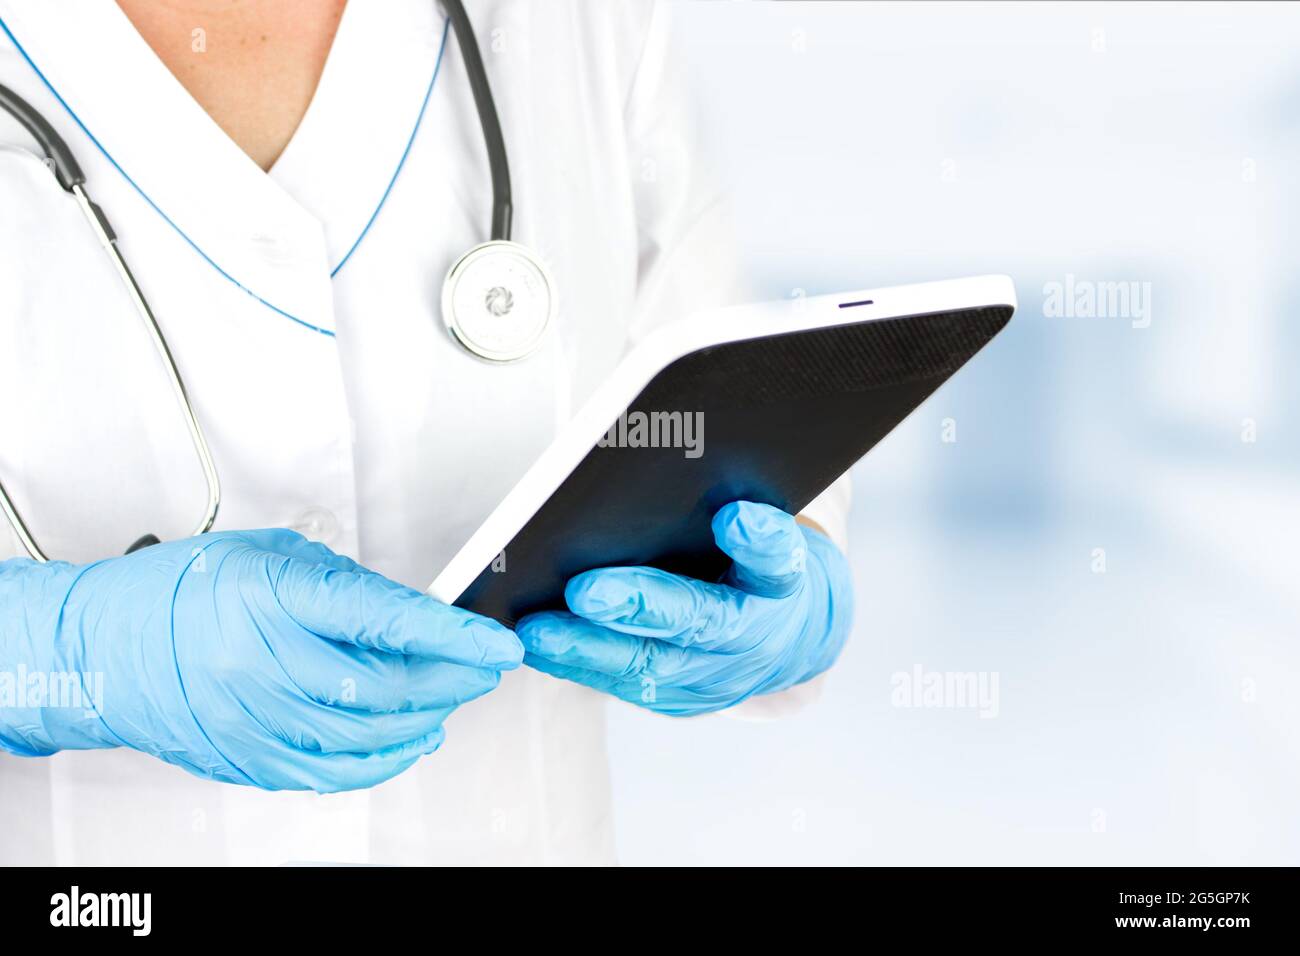 Medizintechnikkonzept. Medizinarzt berührt elektronische Krankenakte auf Tablette. Medizinische Netzwerkverbindung Stockfoto